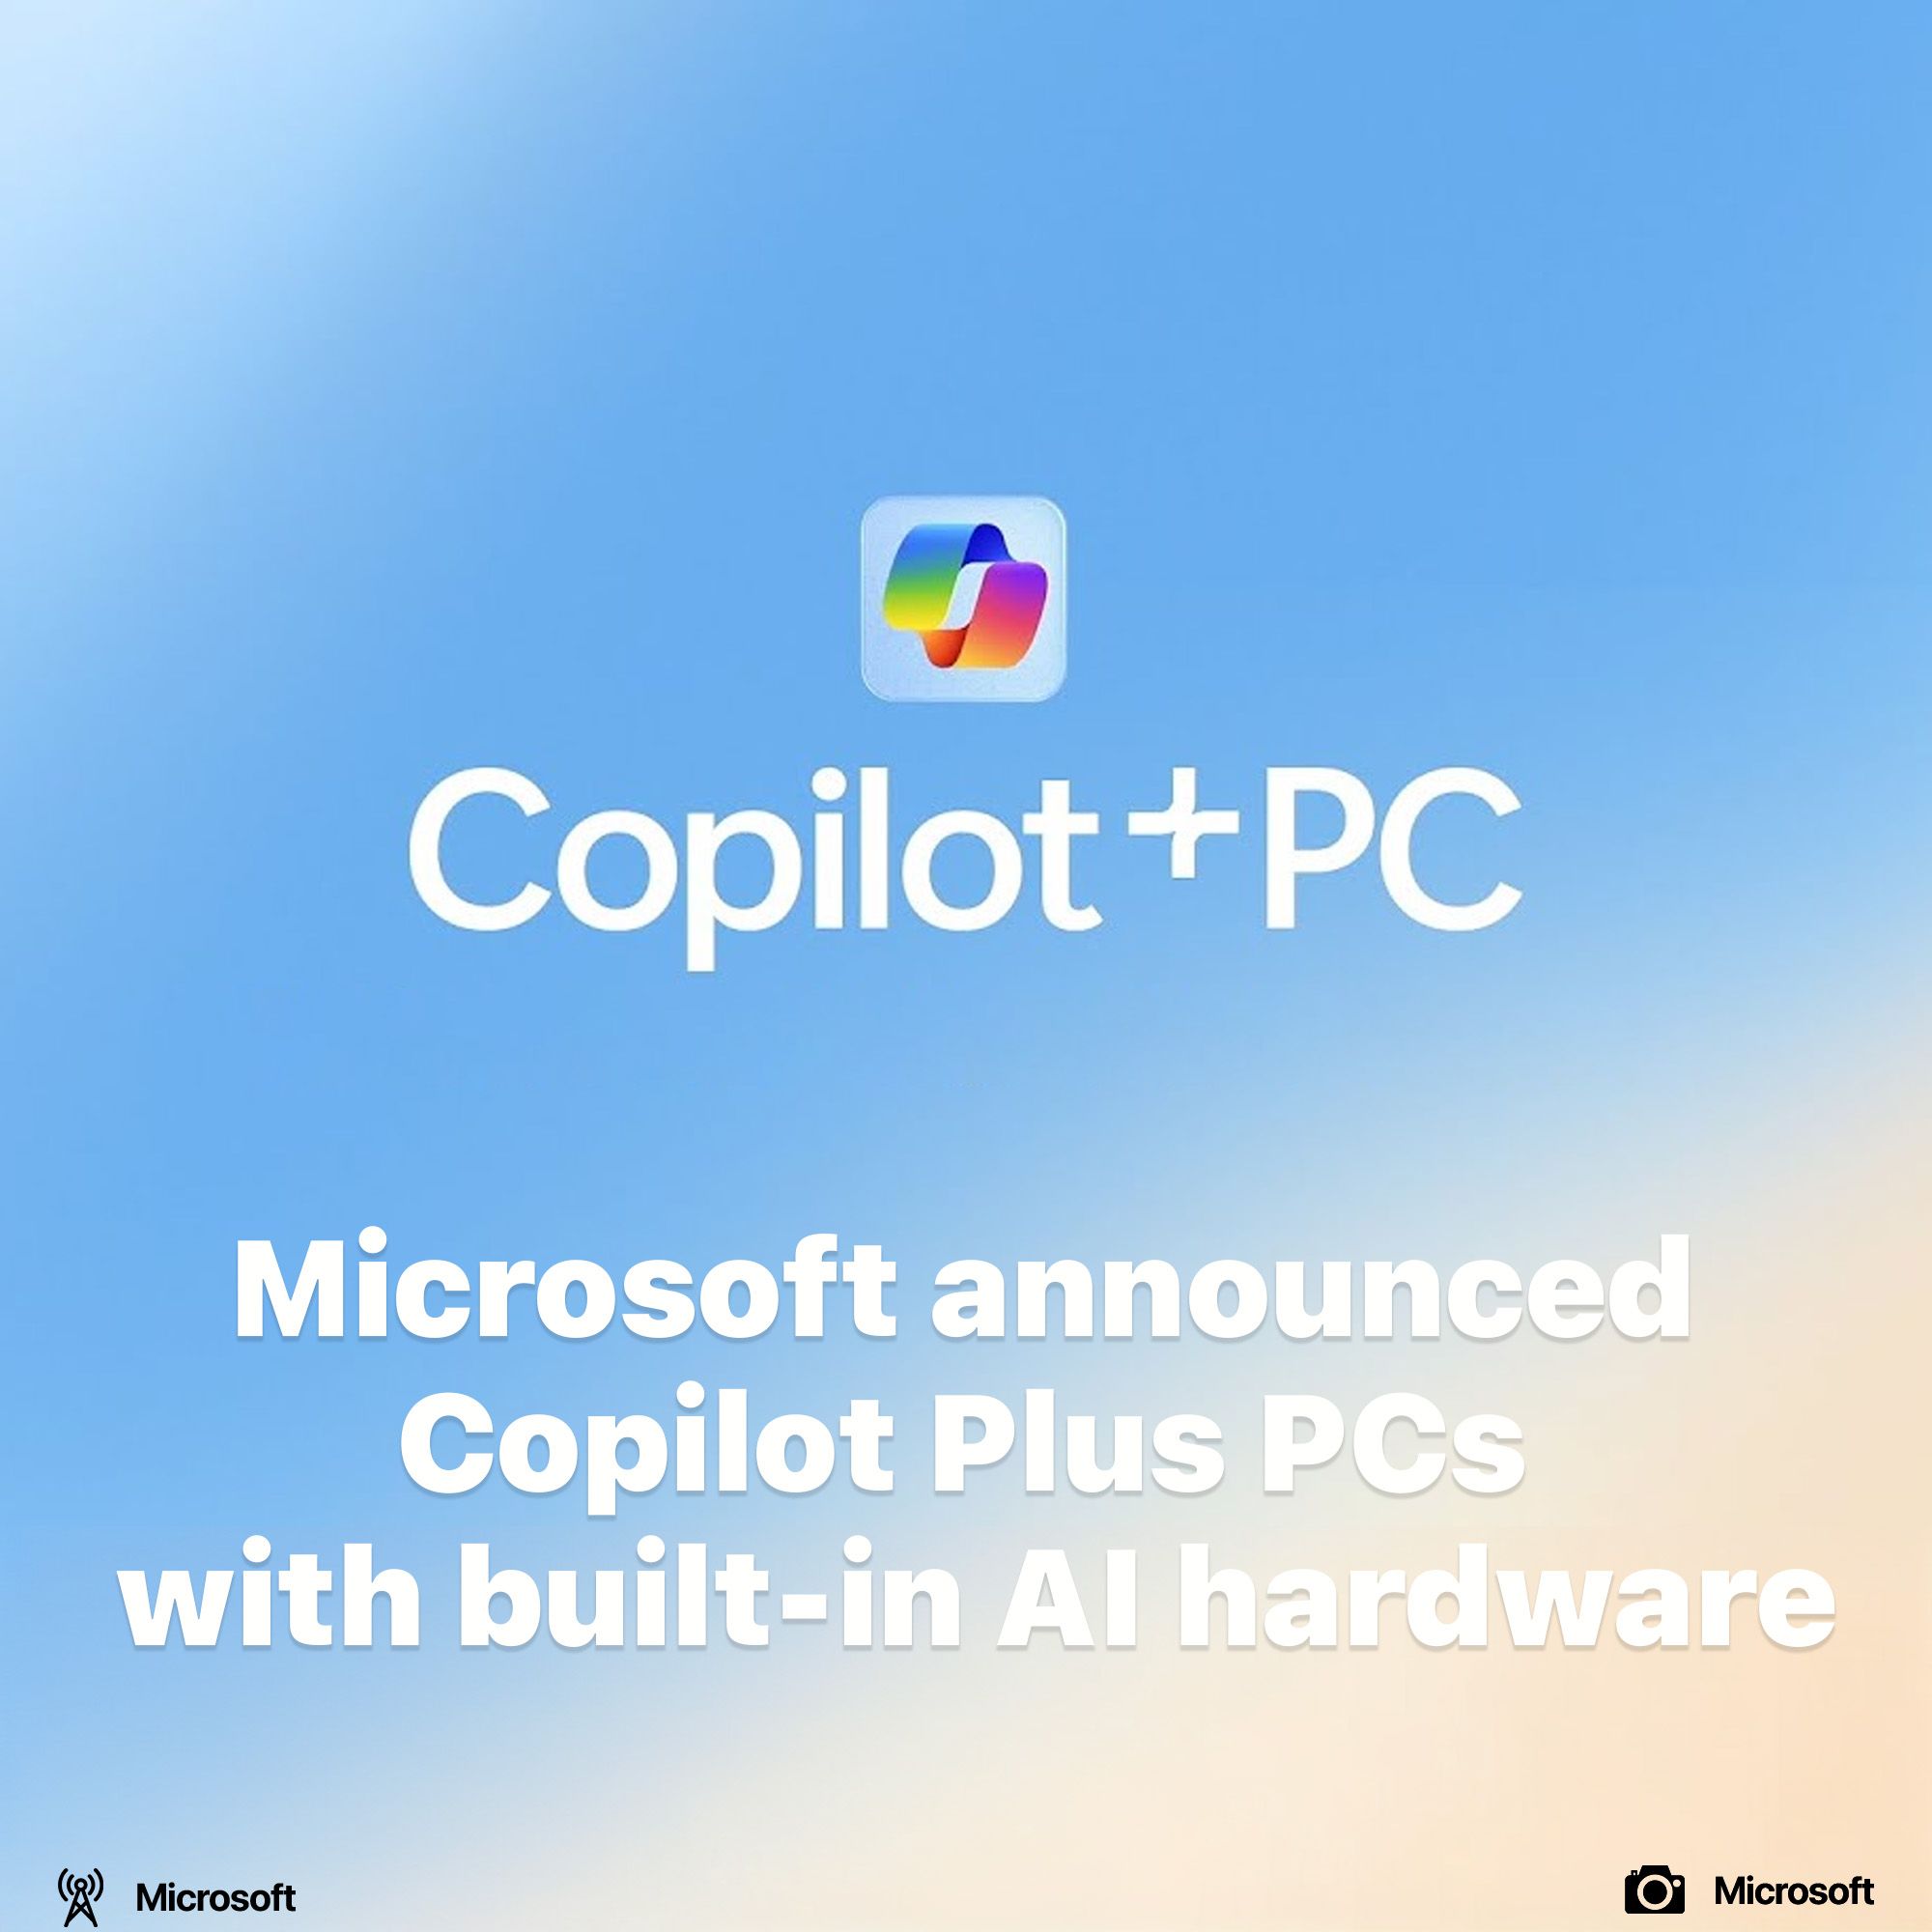 Microsoft announced Copilot Plus PCs